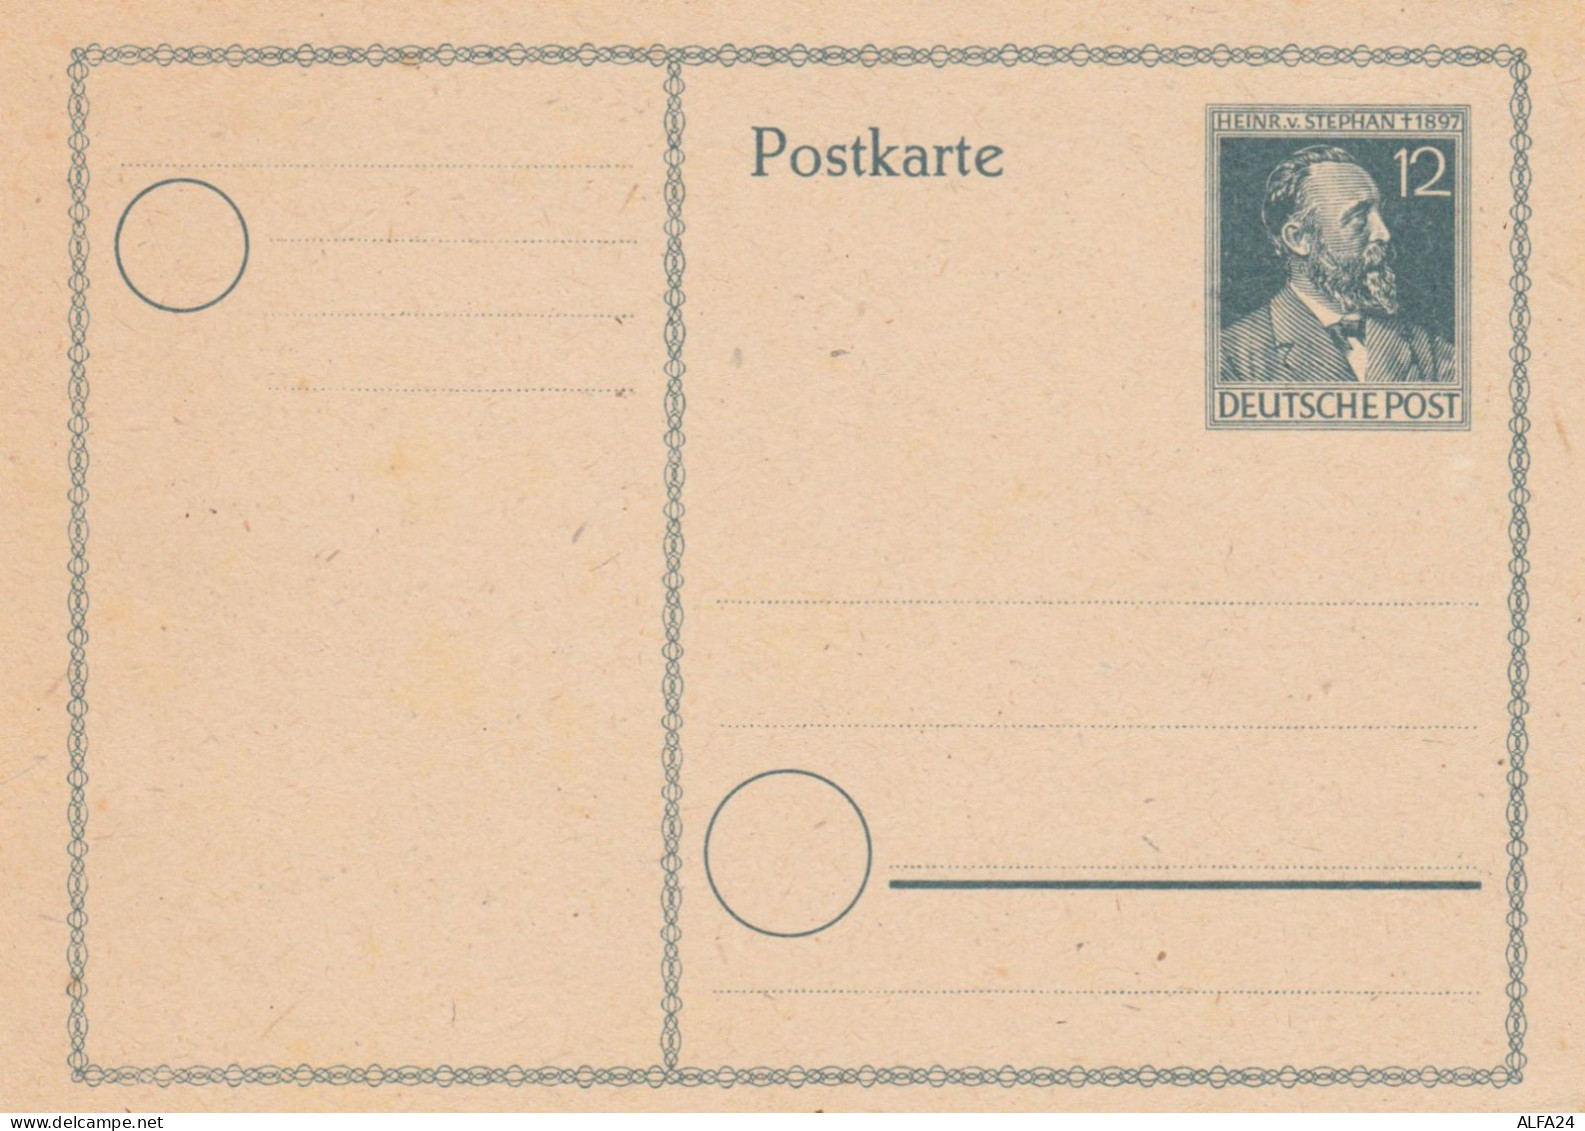 INTERO POSTALE 1948 HEINR STEPHAN NUOVO 12 PF GERMANIA (KP588 - Cartes Postales - Neuves